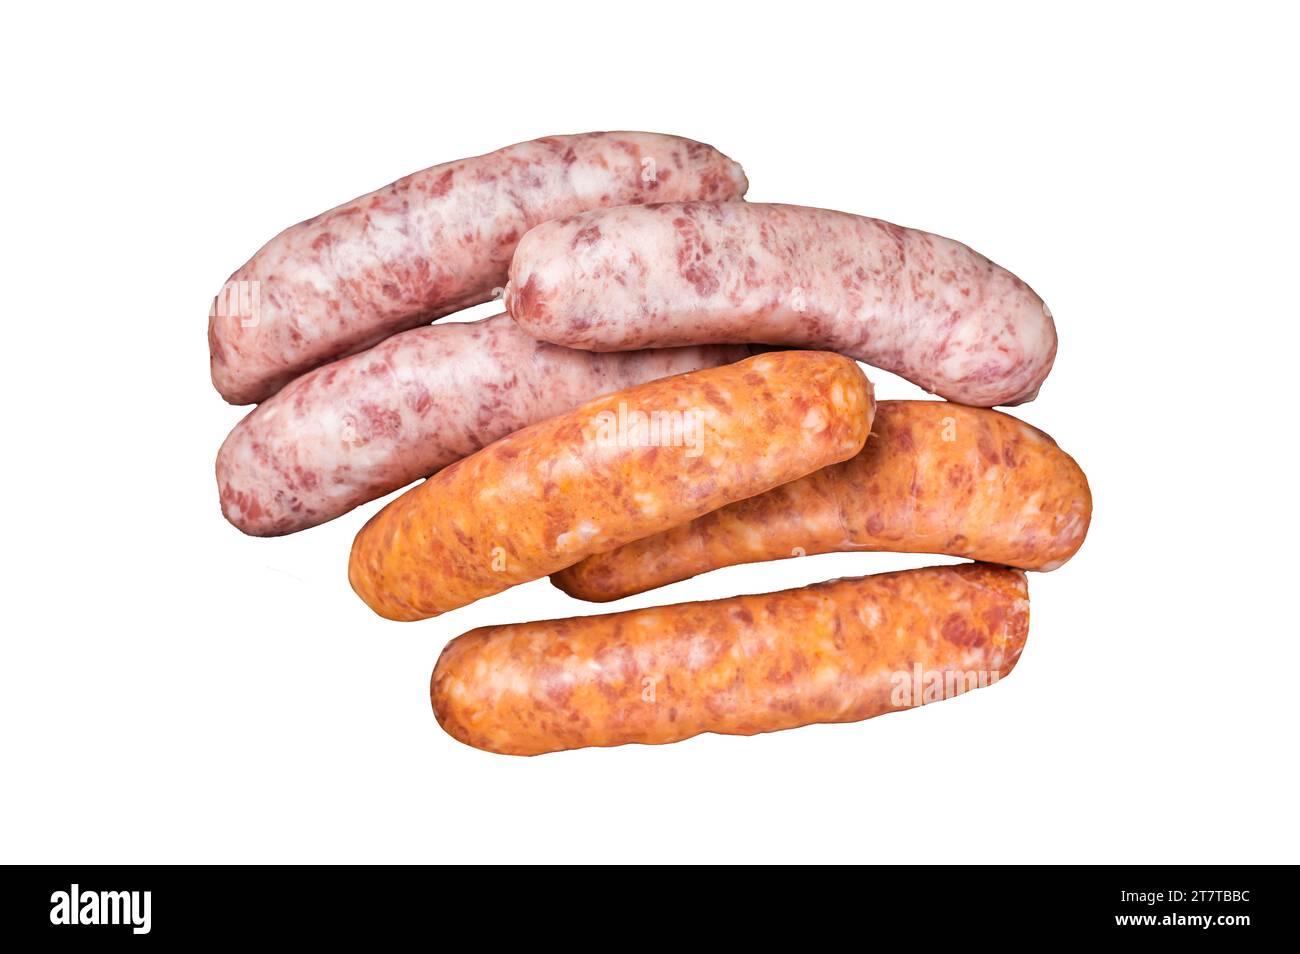 Fresh Raw Bratwurst and Chorizo meat sausages on wooden board. Isolated, white background Stock Photo